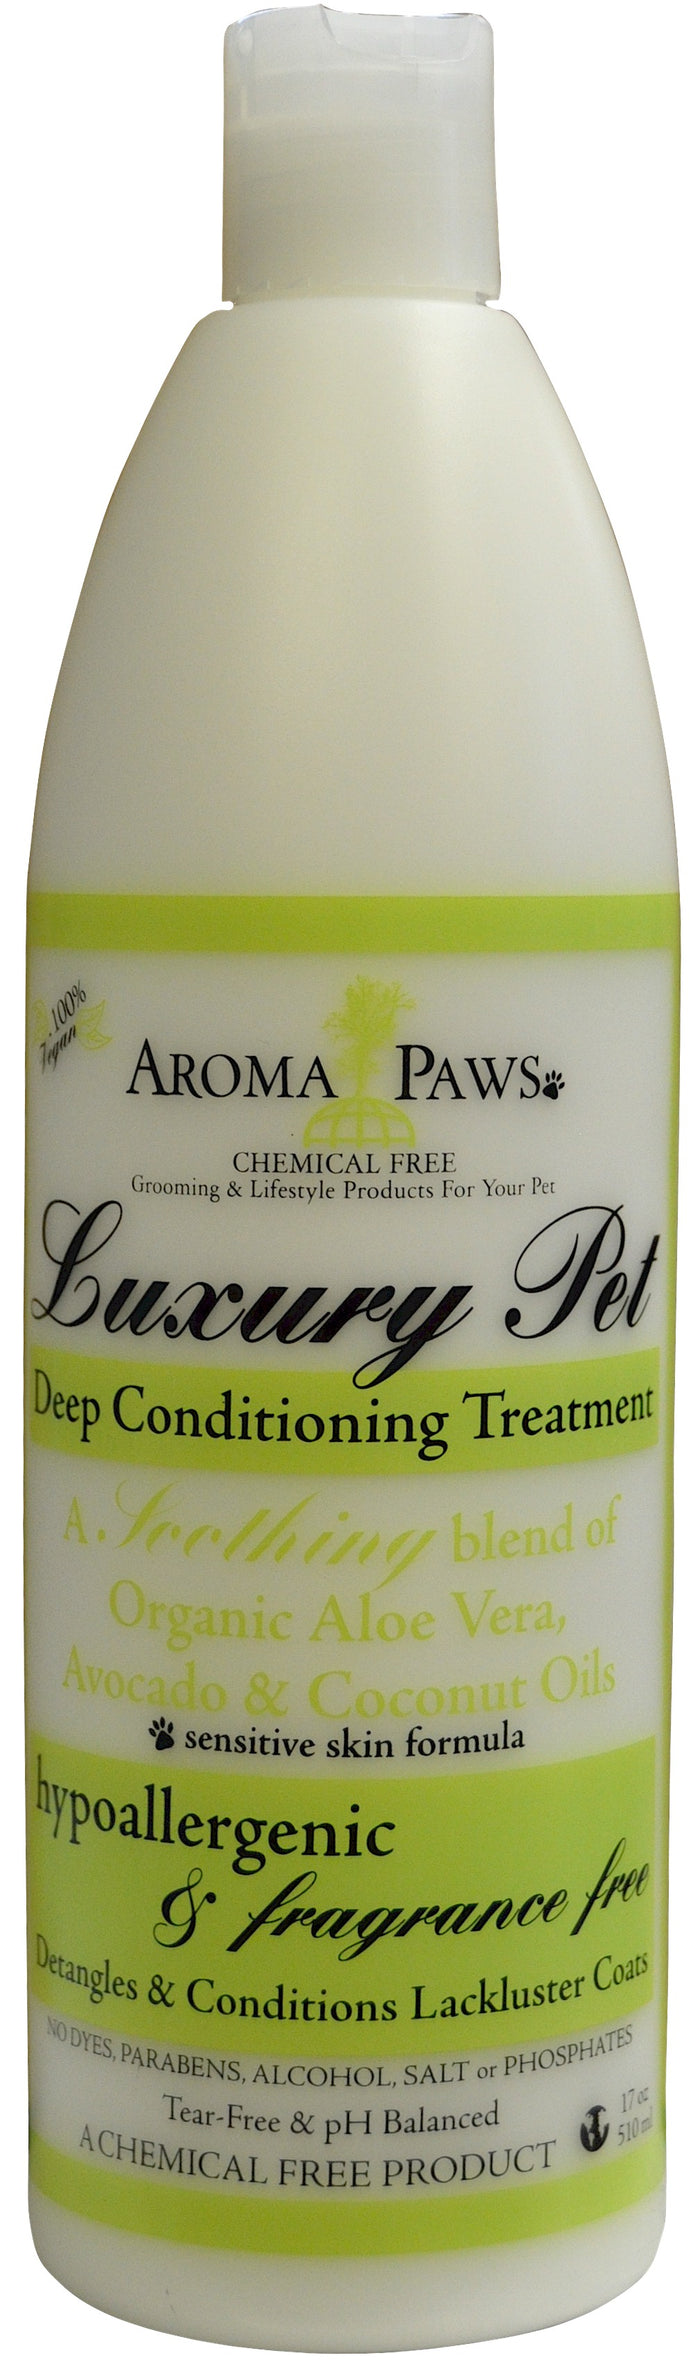 Aroma Paws Organic Deep Conditioning Treatment